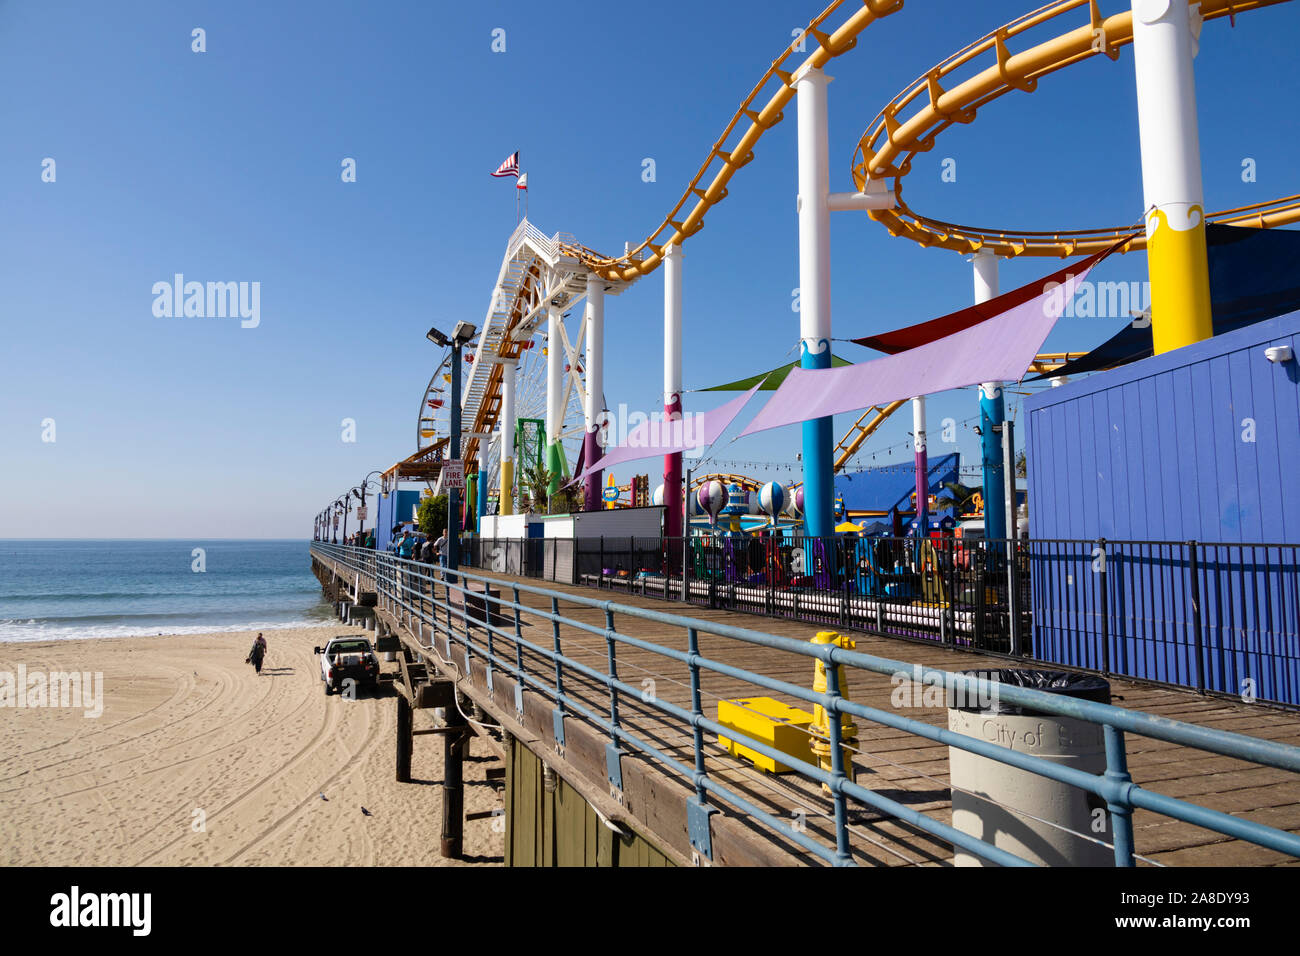 The pier, Santa Monica, Los Angeles County, California, United